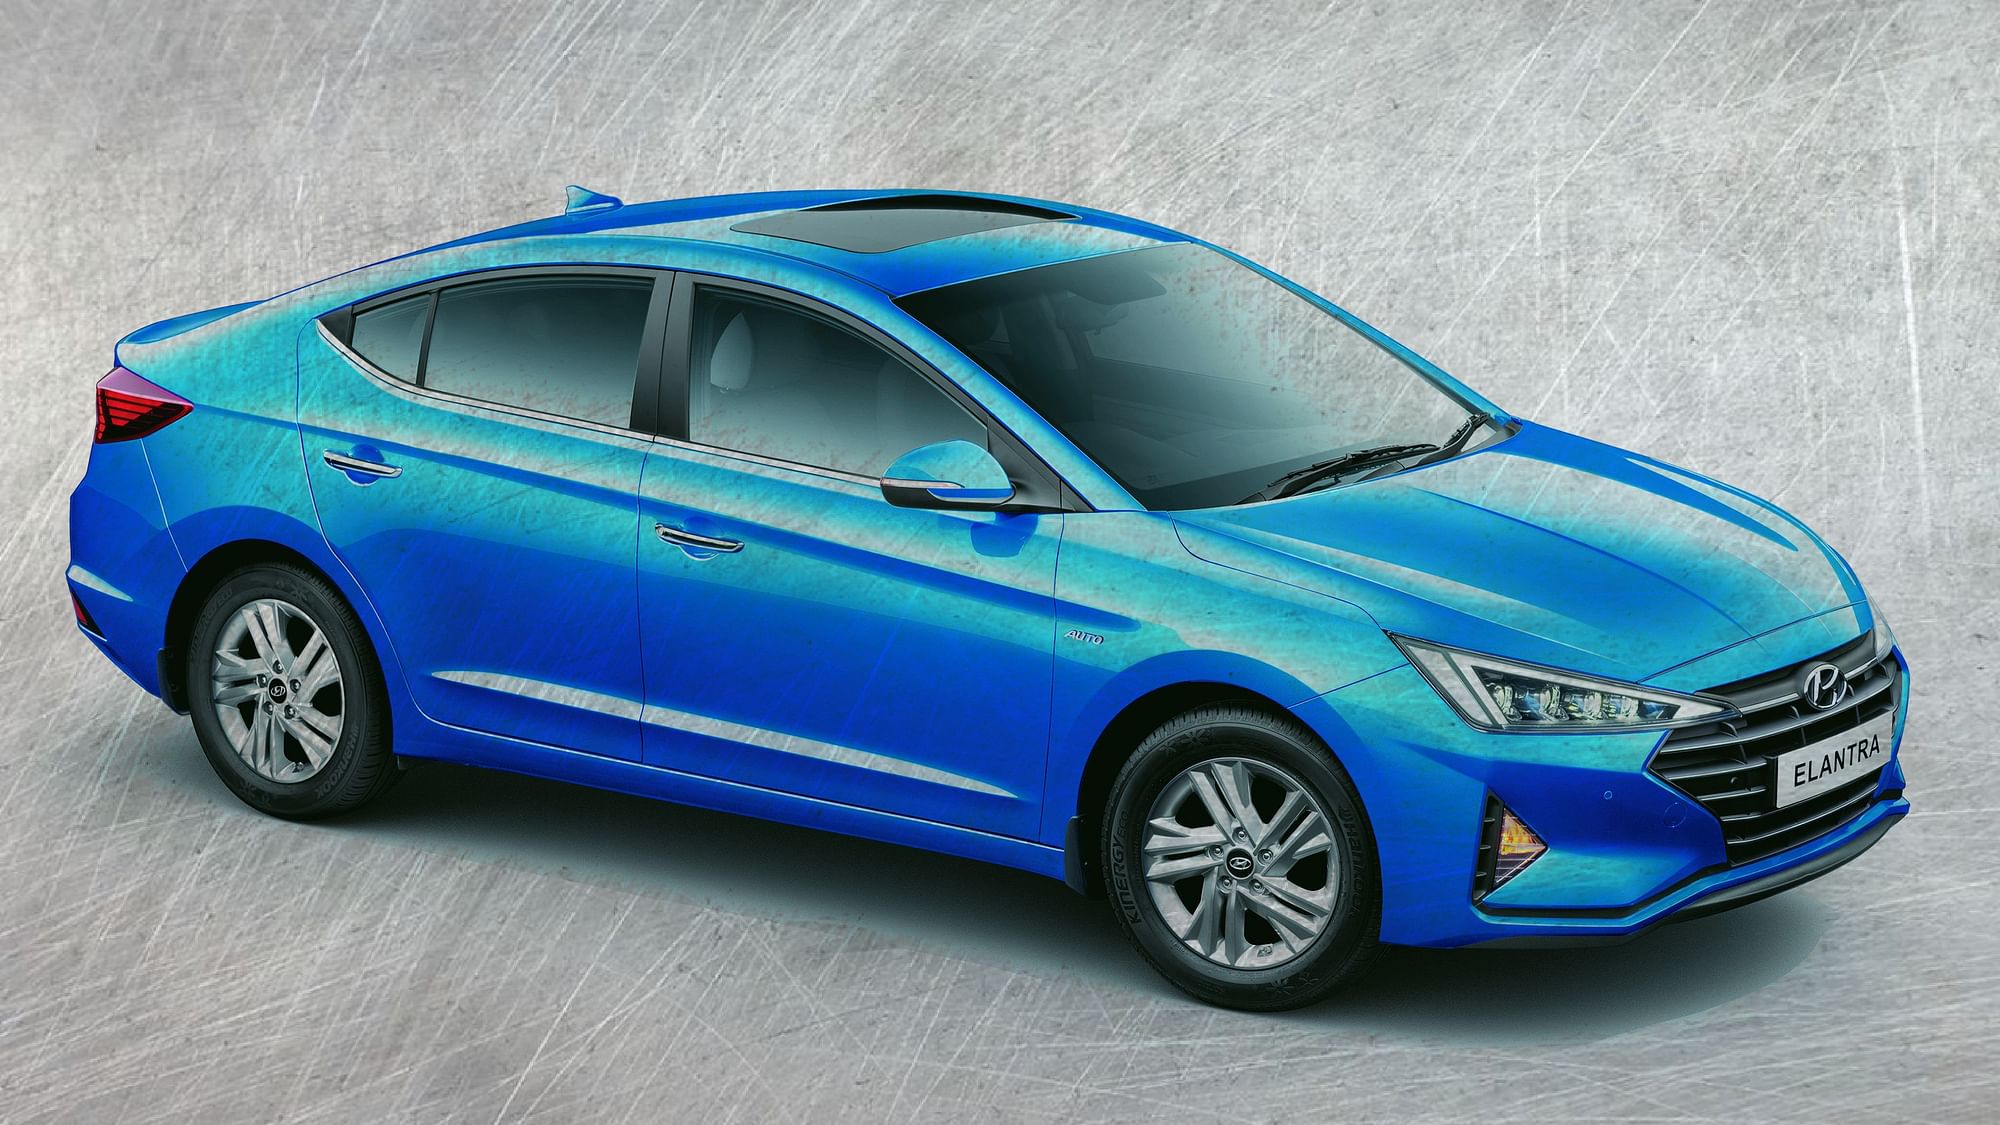 The Hyundai Elantra competes with the Honda Civic, Skoda Octavia and Toyota Corolla Altis.